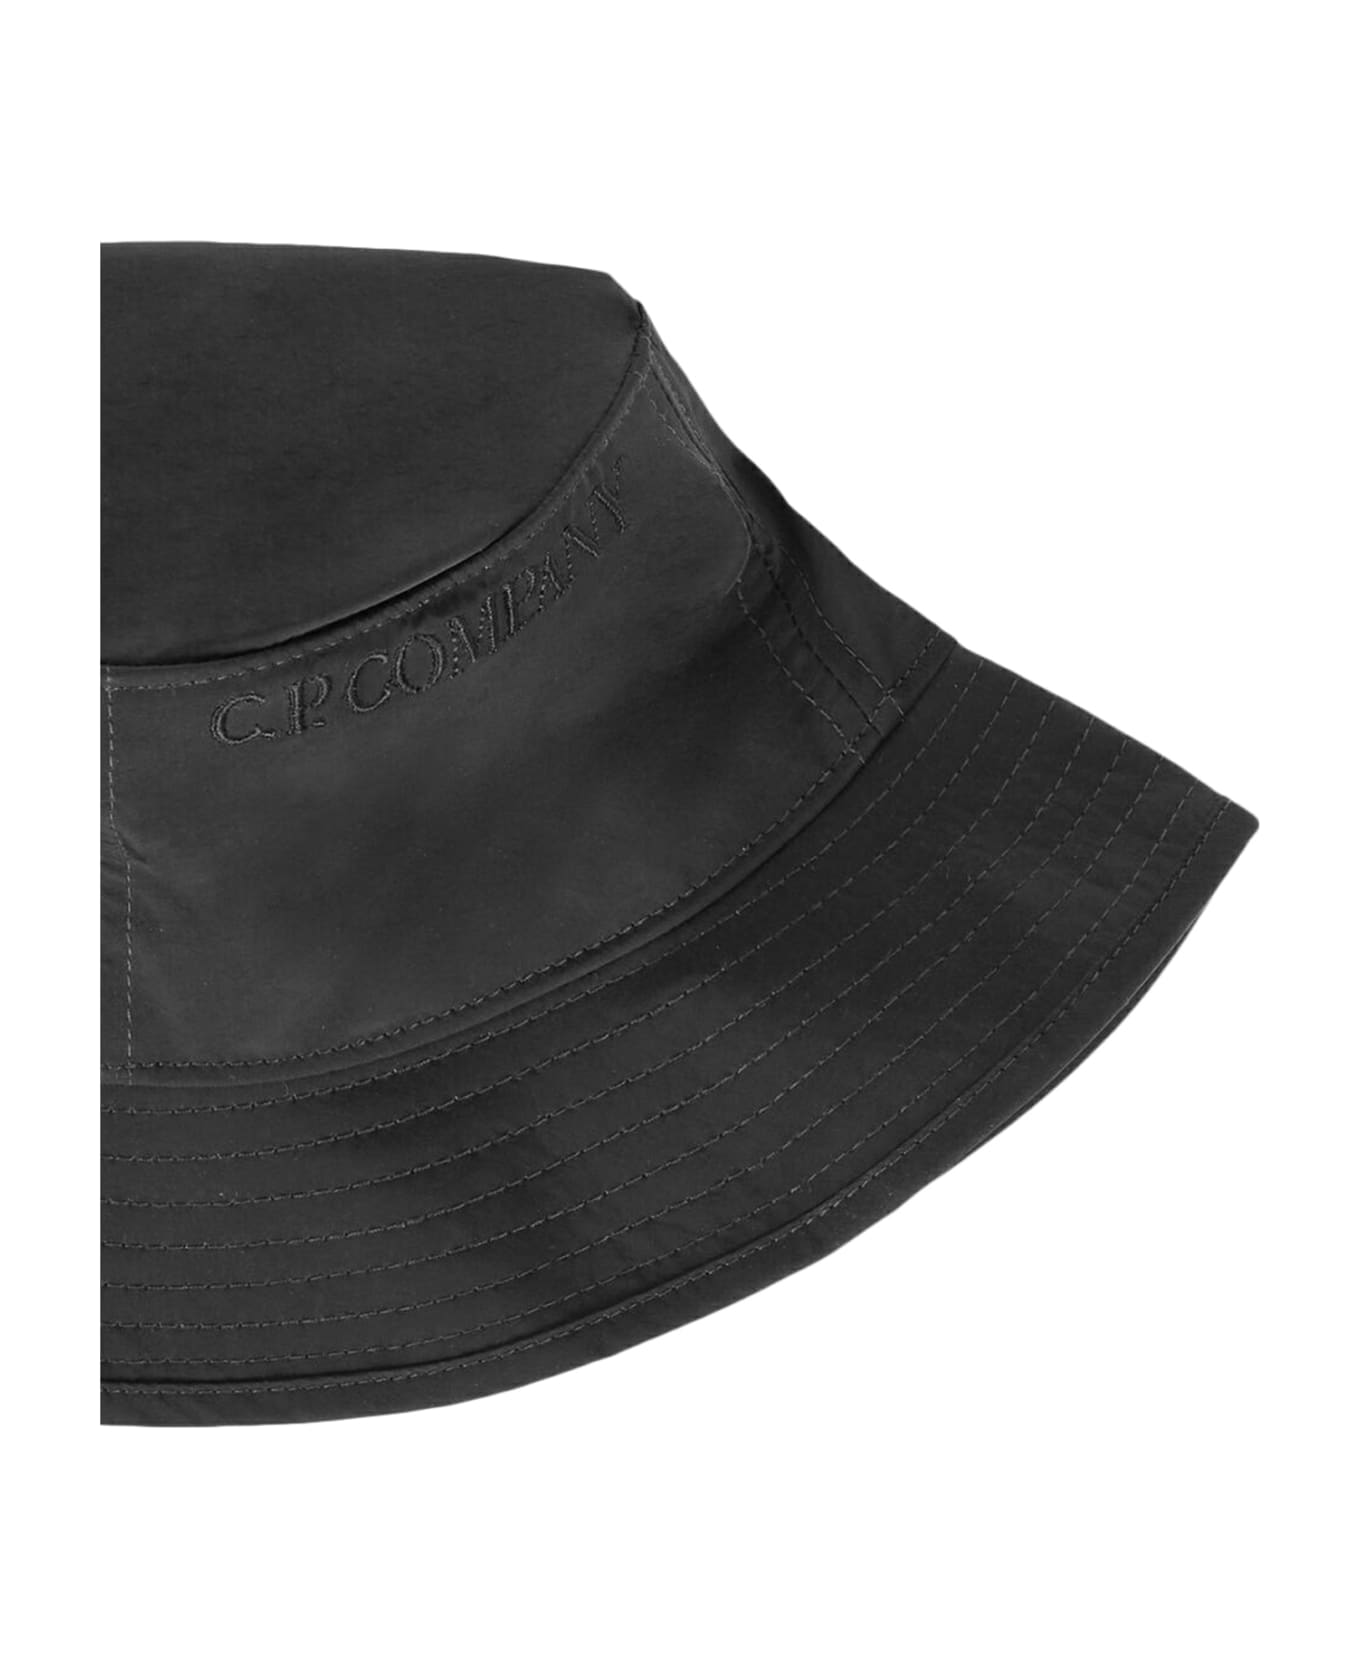 C.P. Company Bucket Hat - Black 帽子